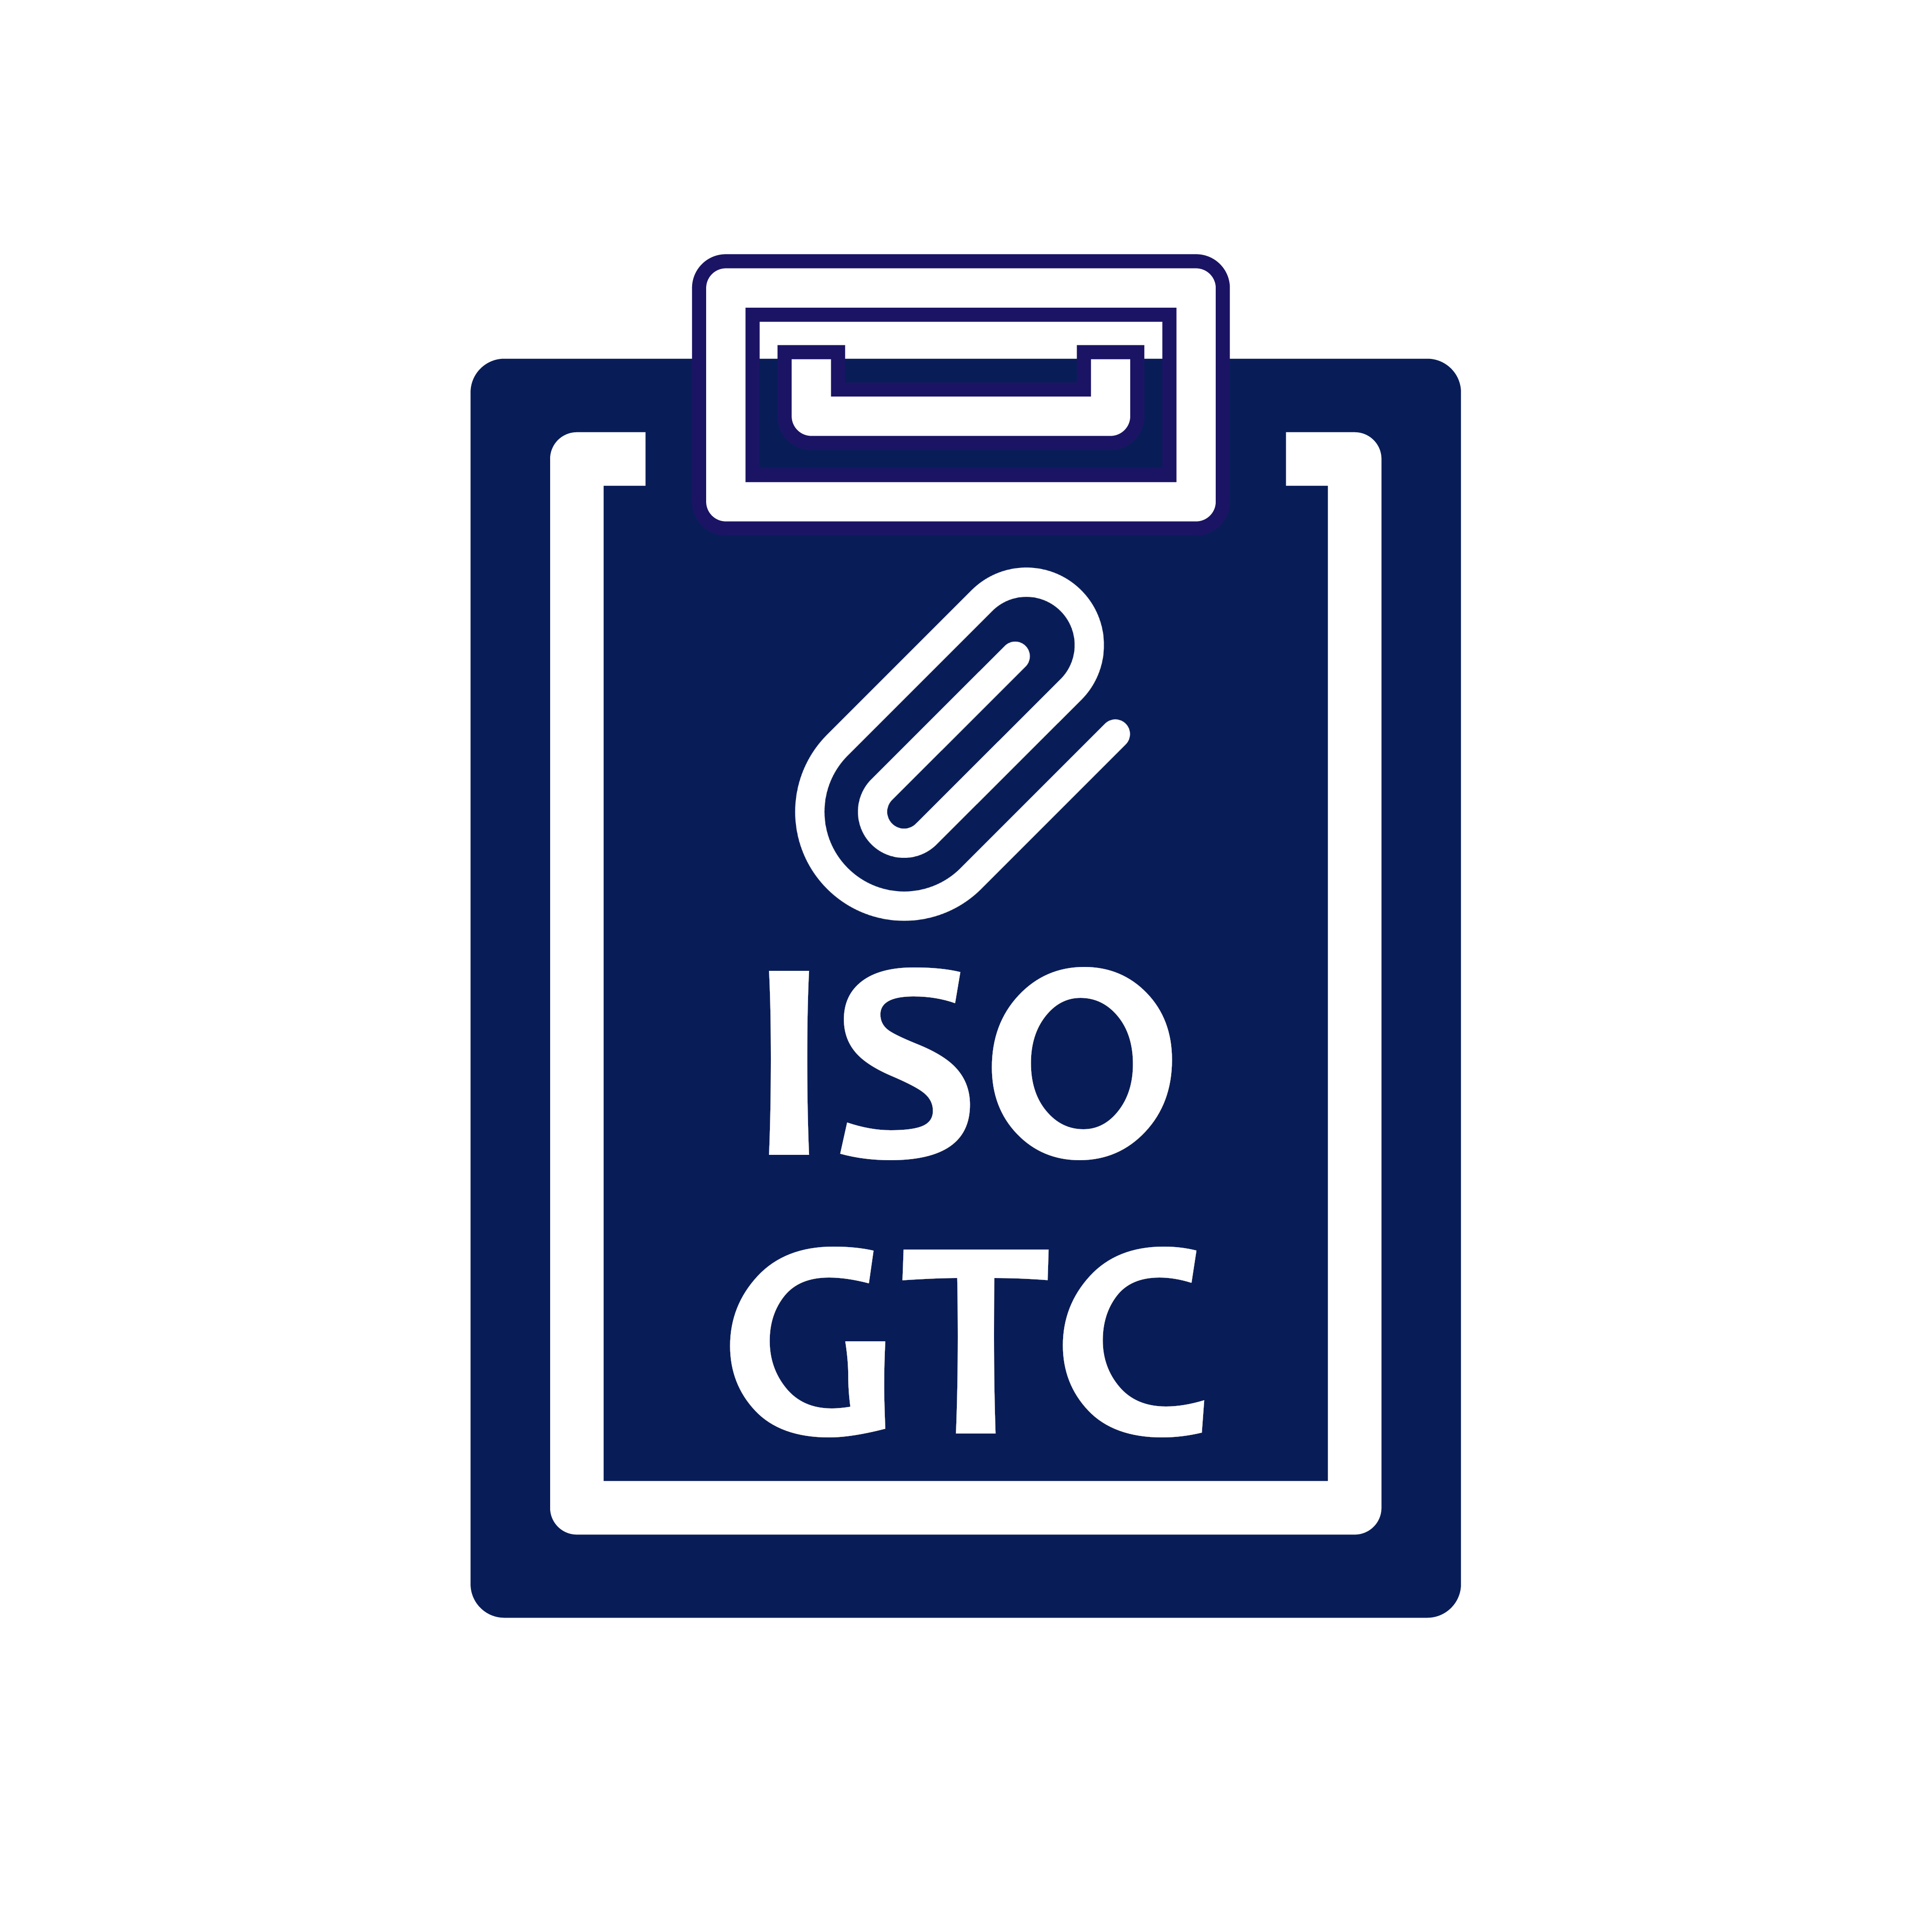 ISO 13399/GTC